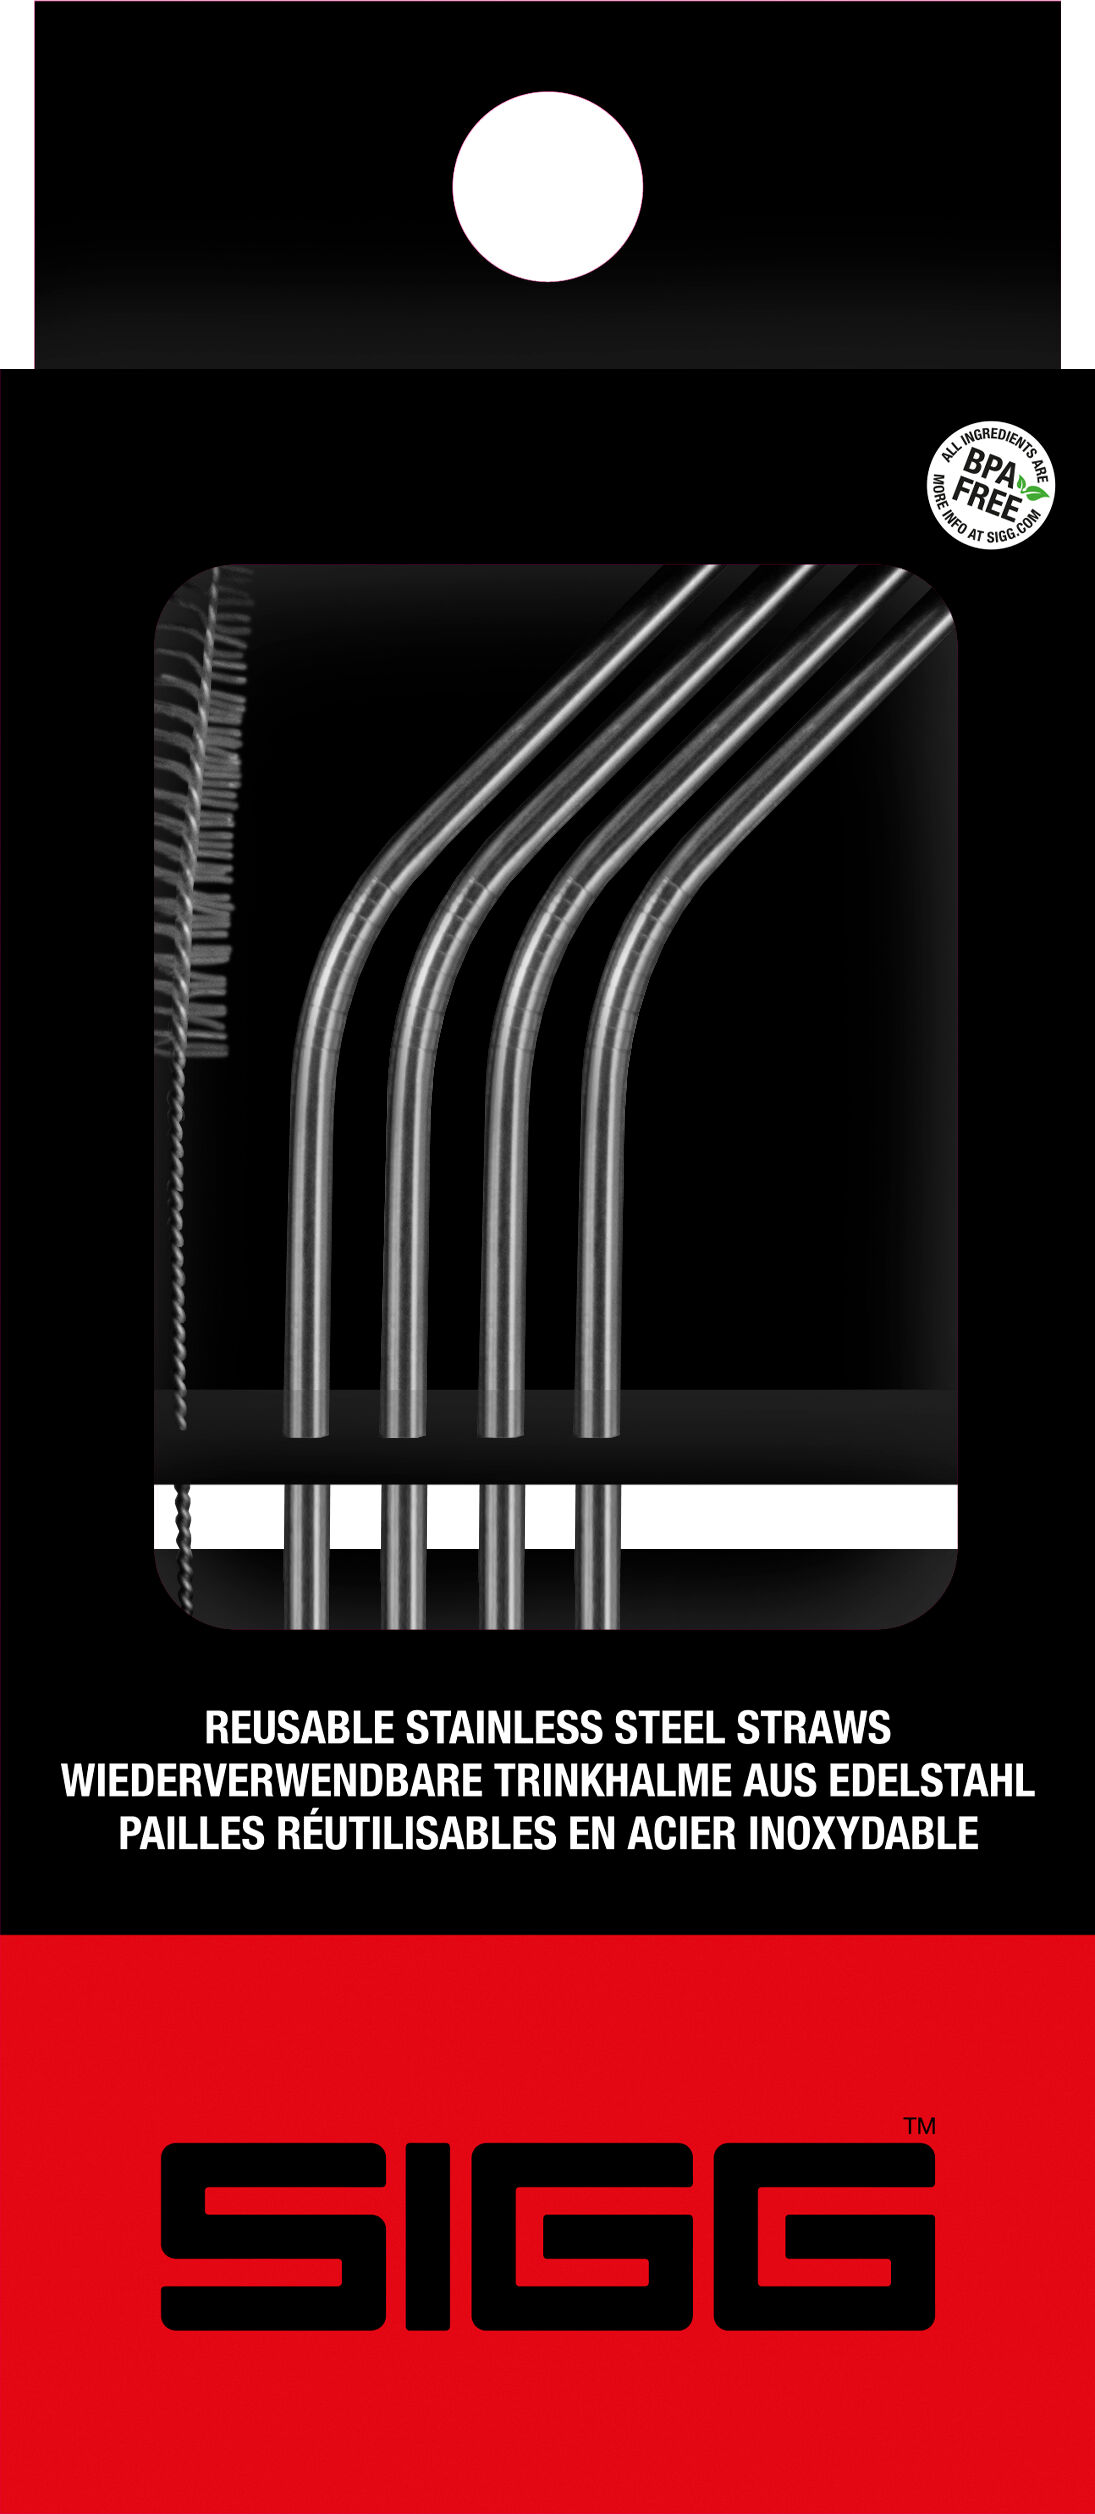 Sigg Stainless Steel Straw Set